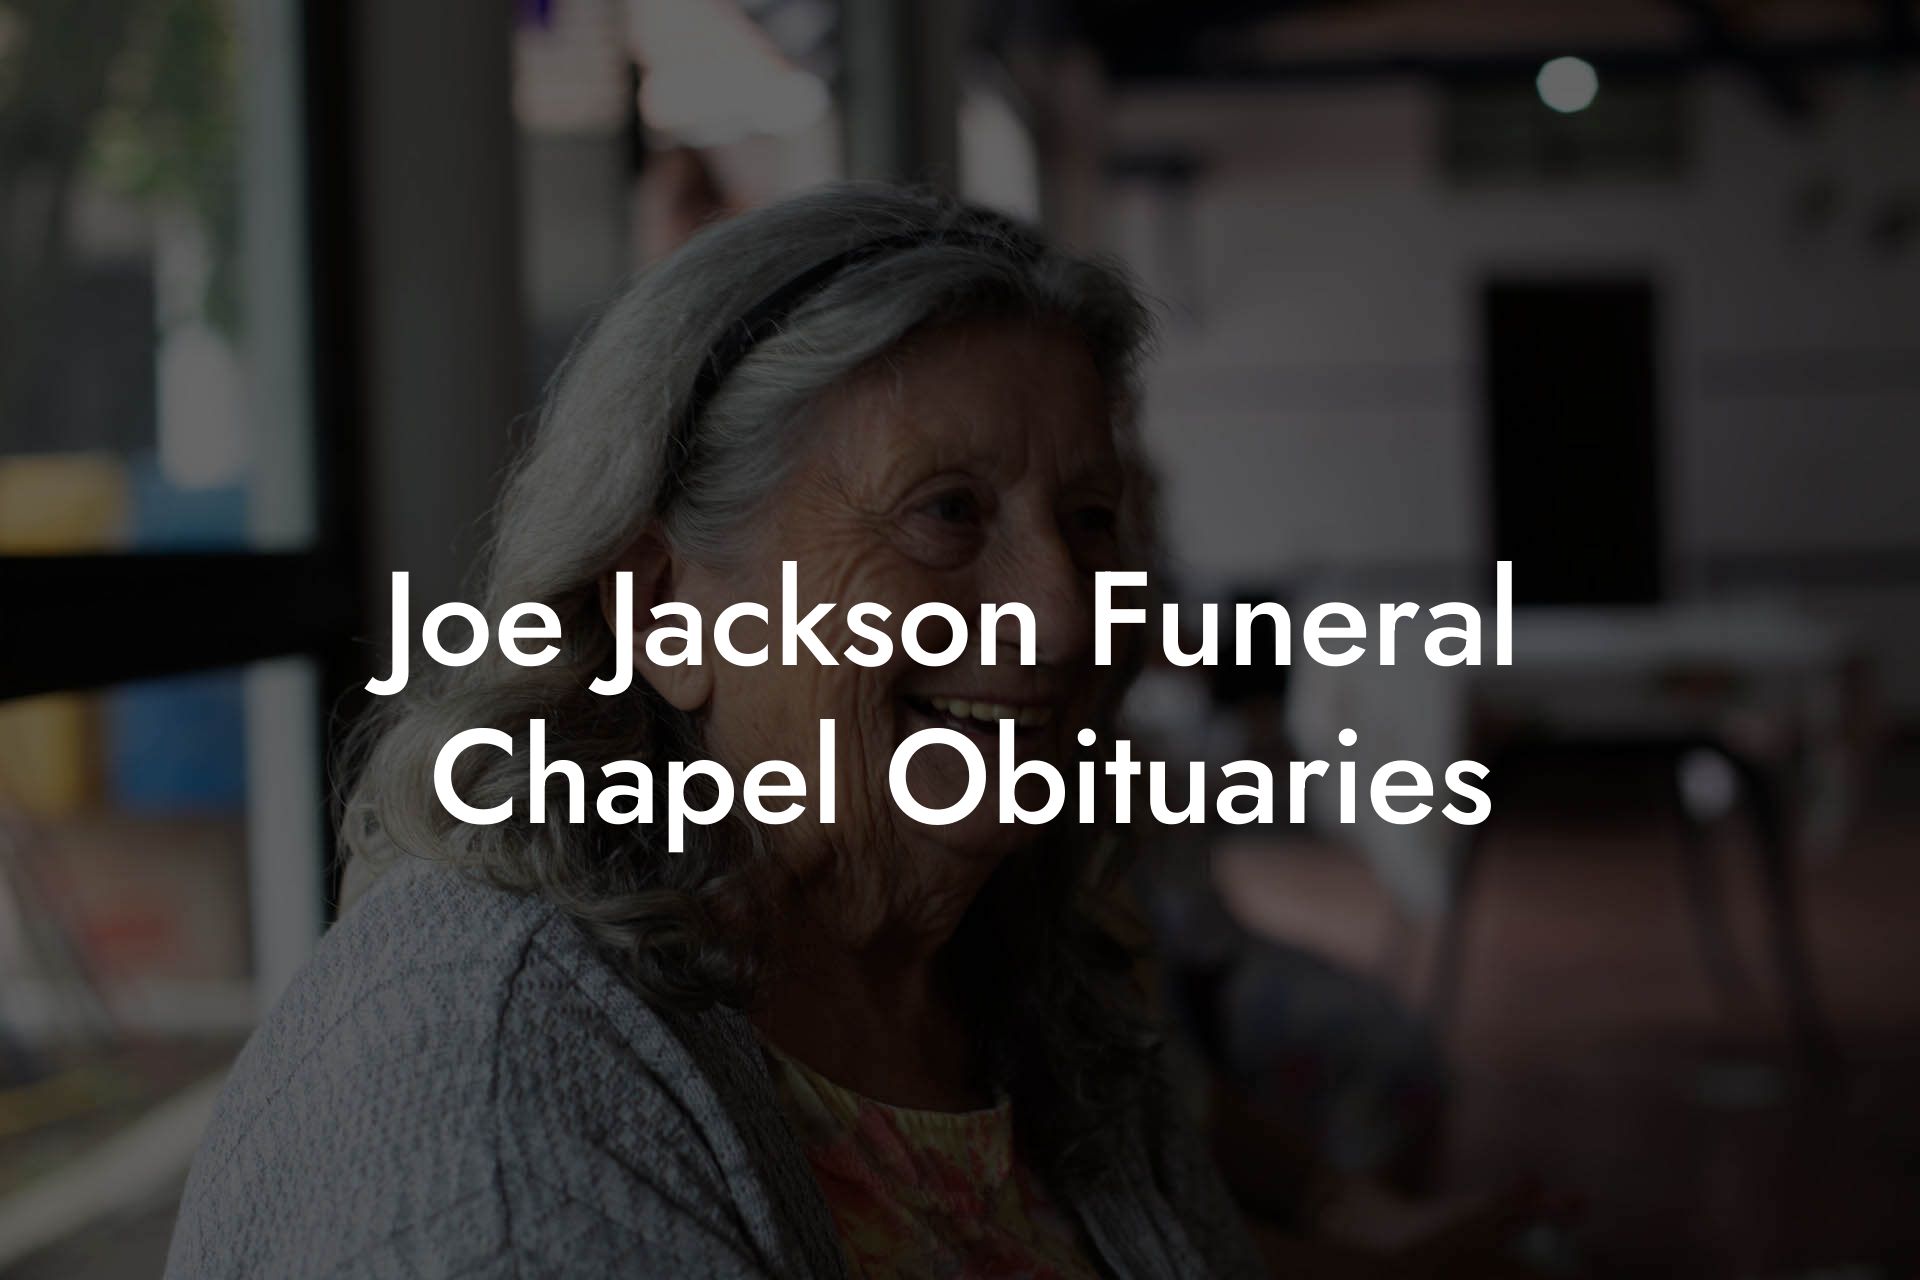 Joe Jackson Funeral Chapel Obituaries